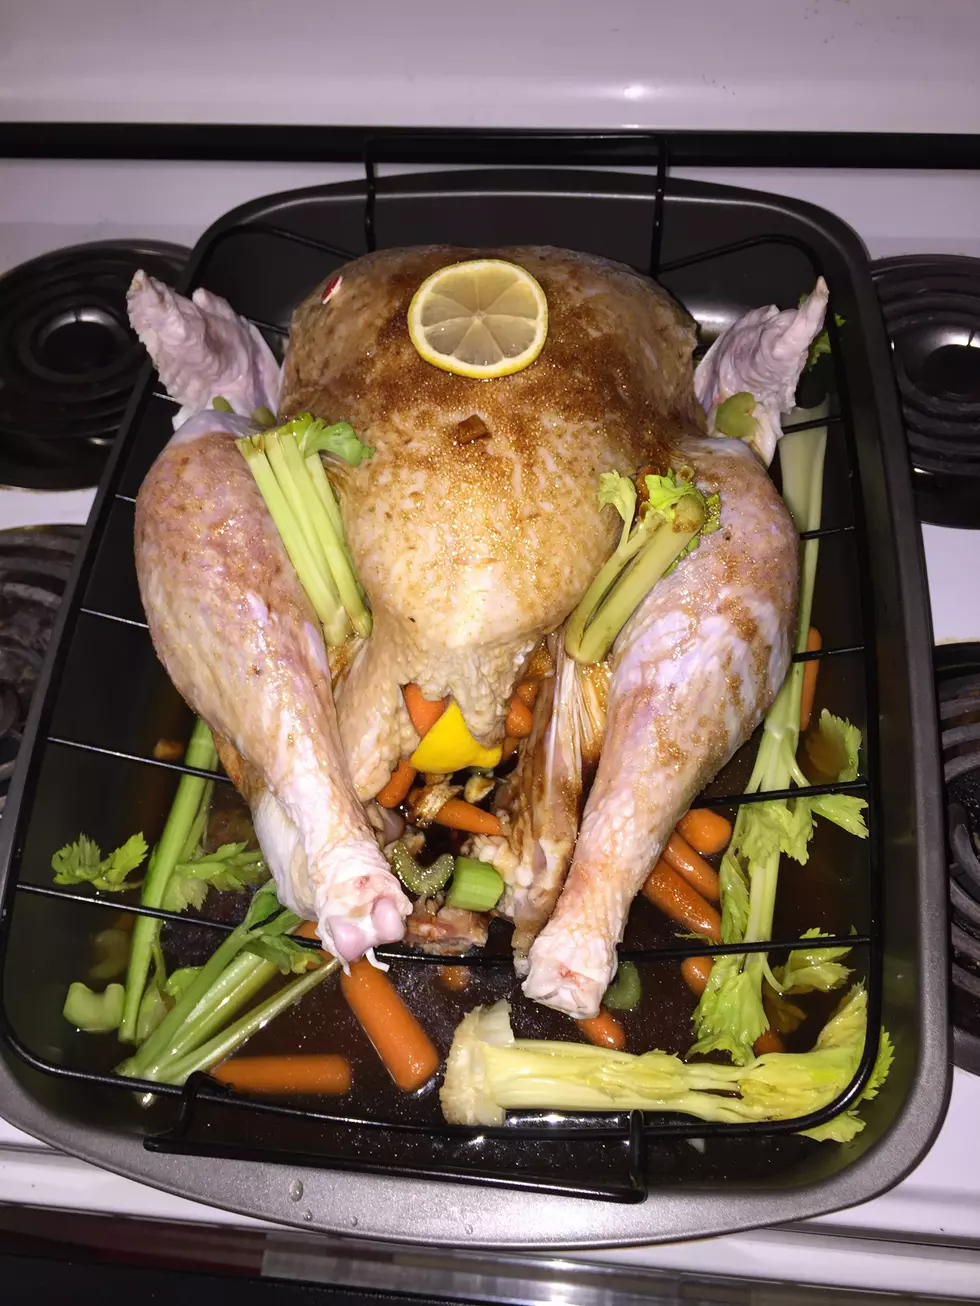 I Prepared My Turkey Different This Year